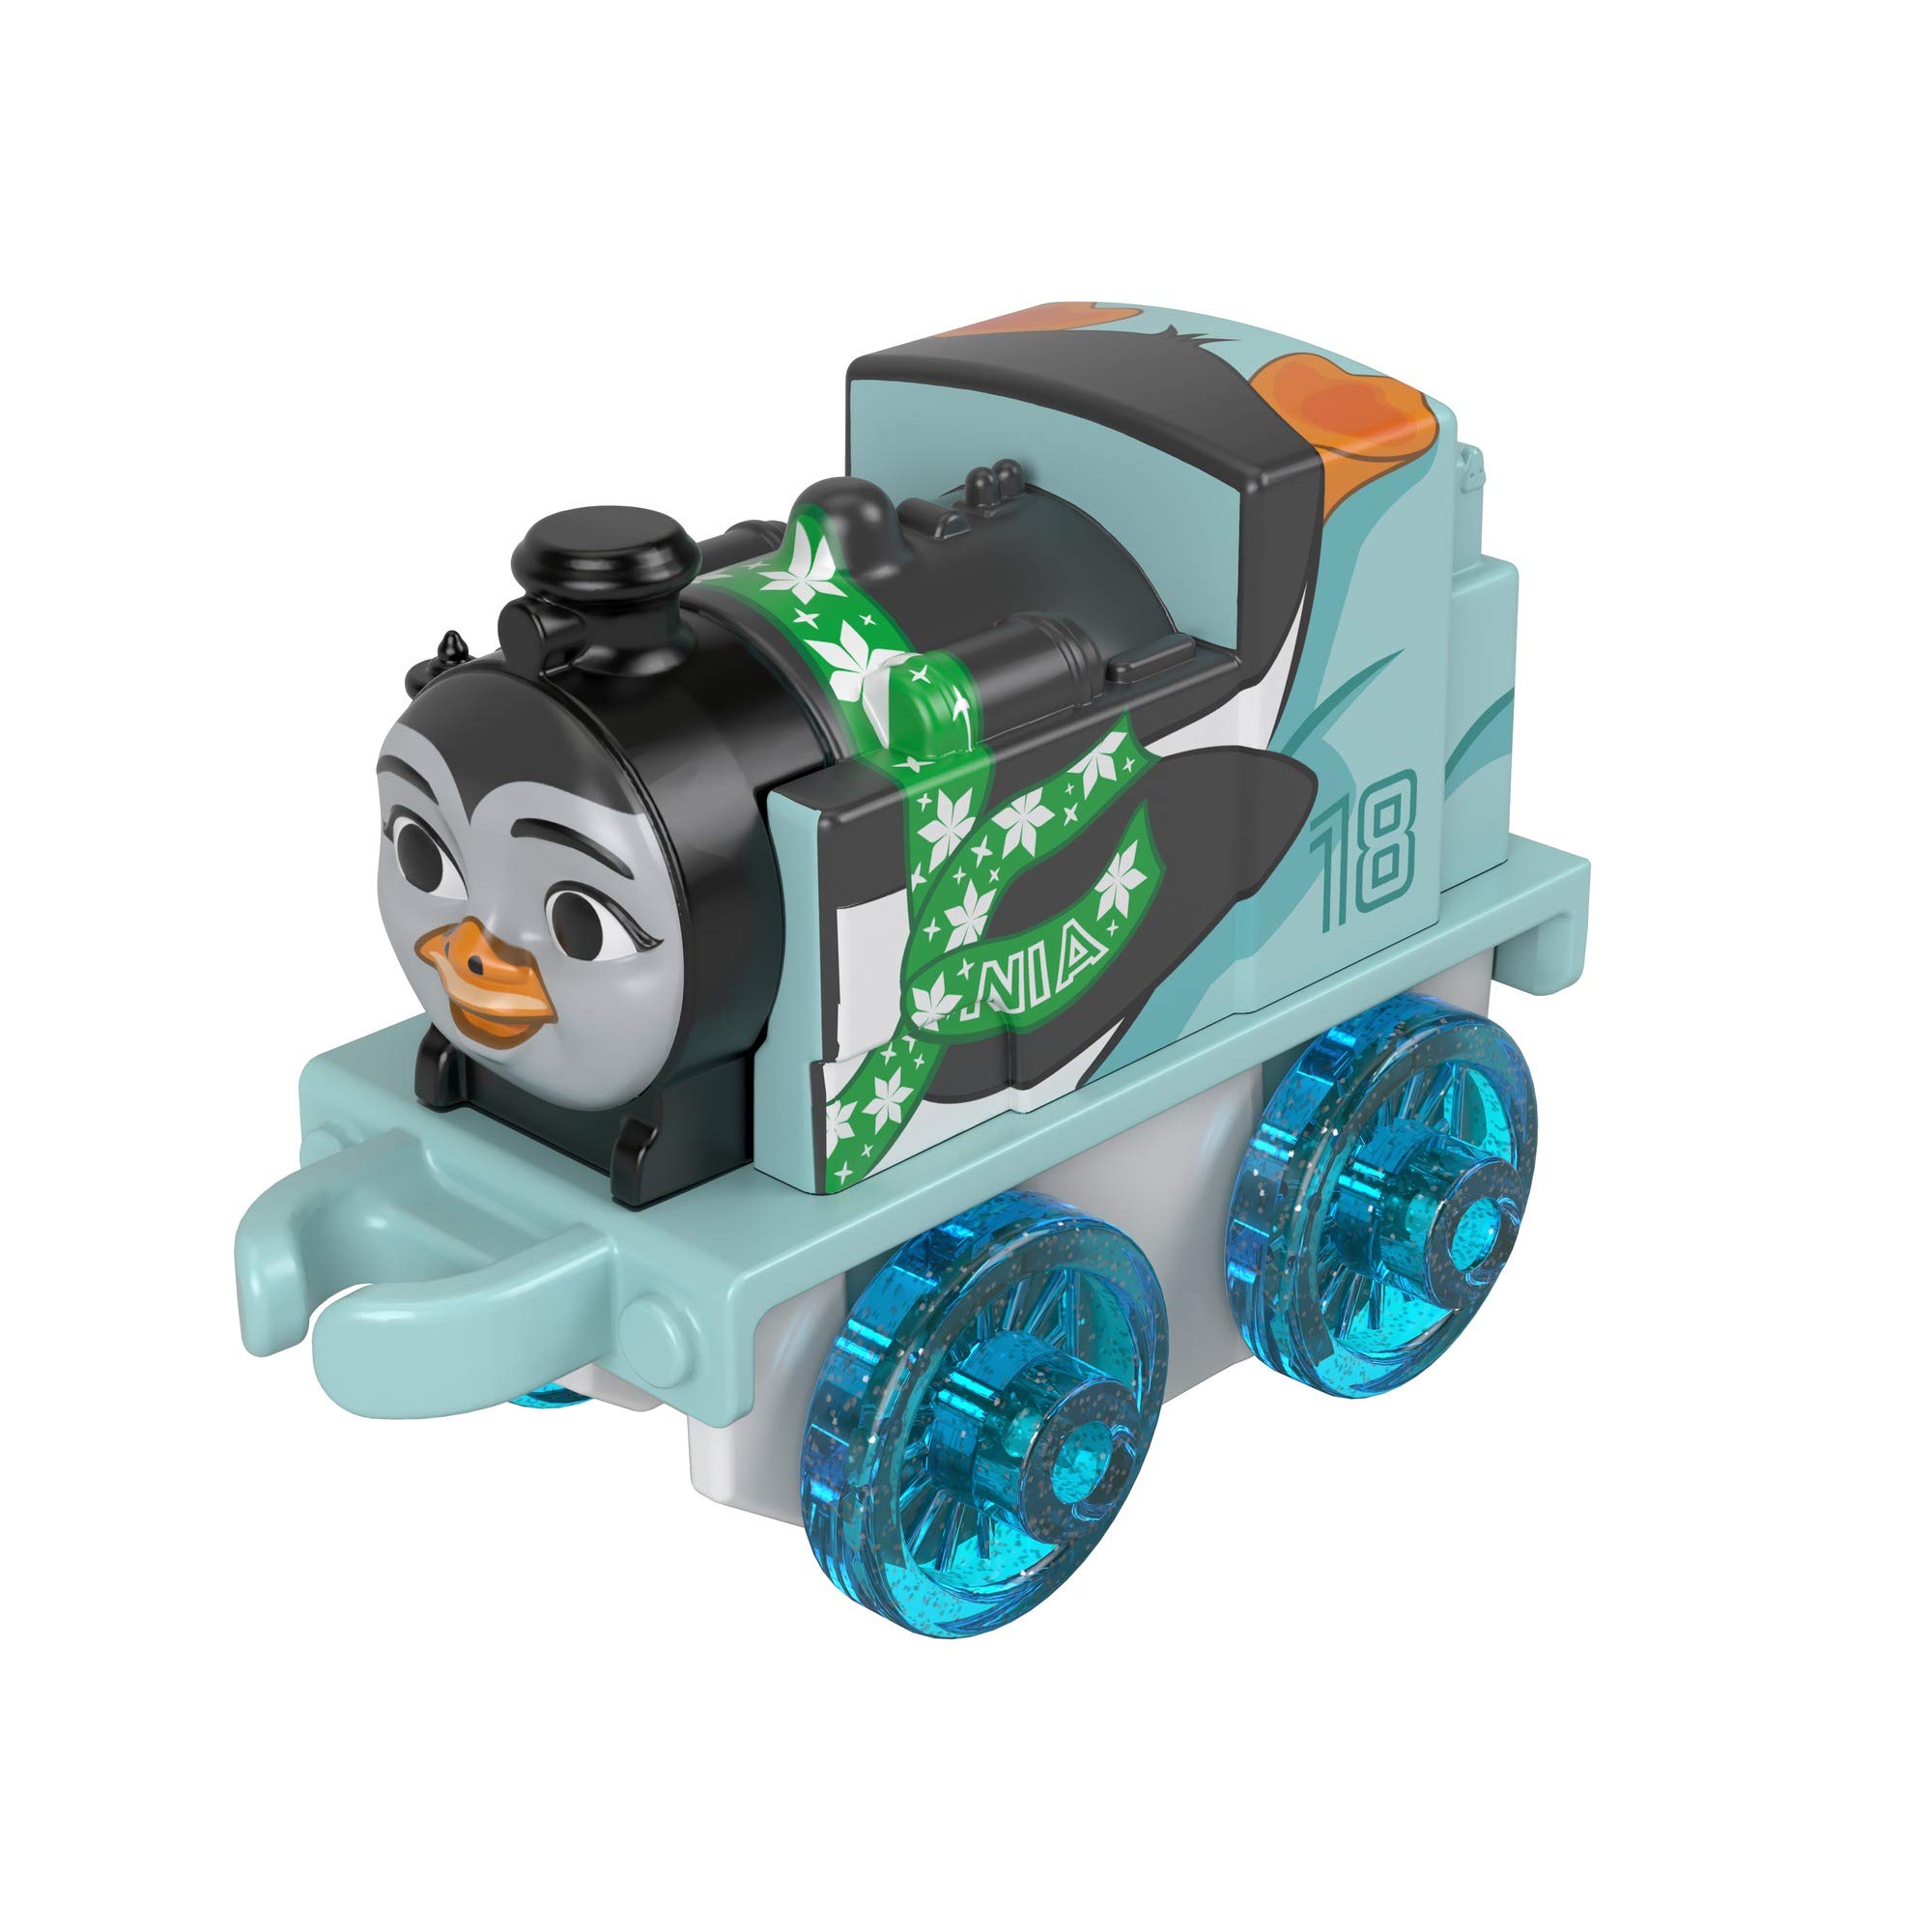 Thomas & Friends MINIS Advent Calendar 24 miniature toy trains